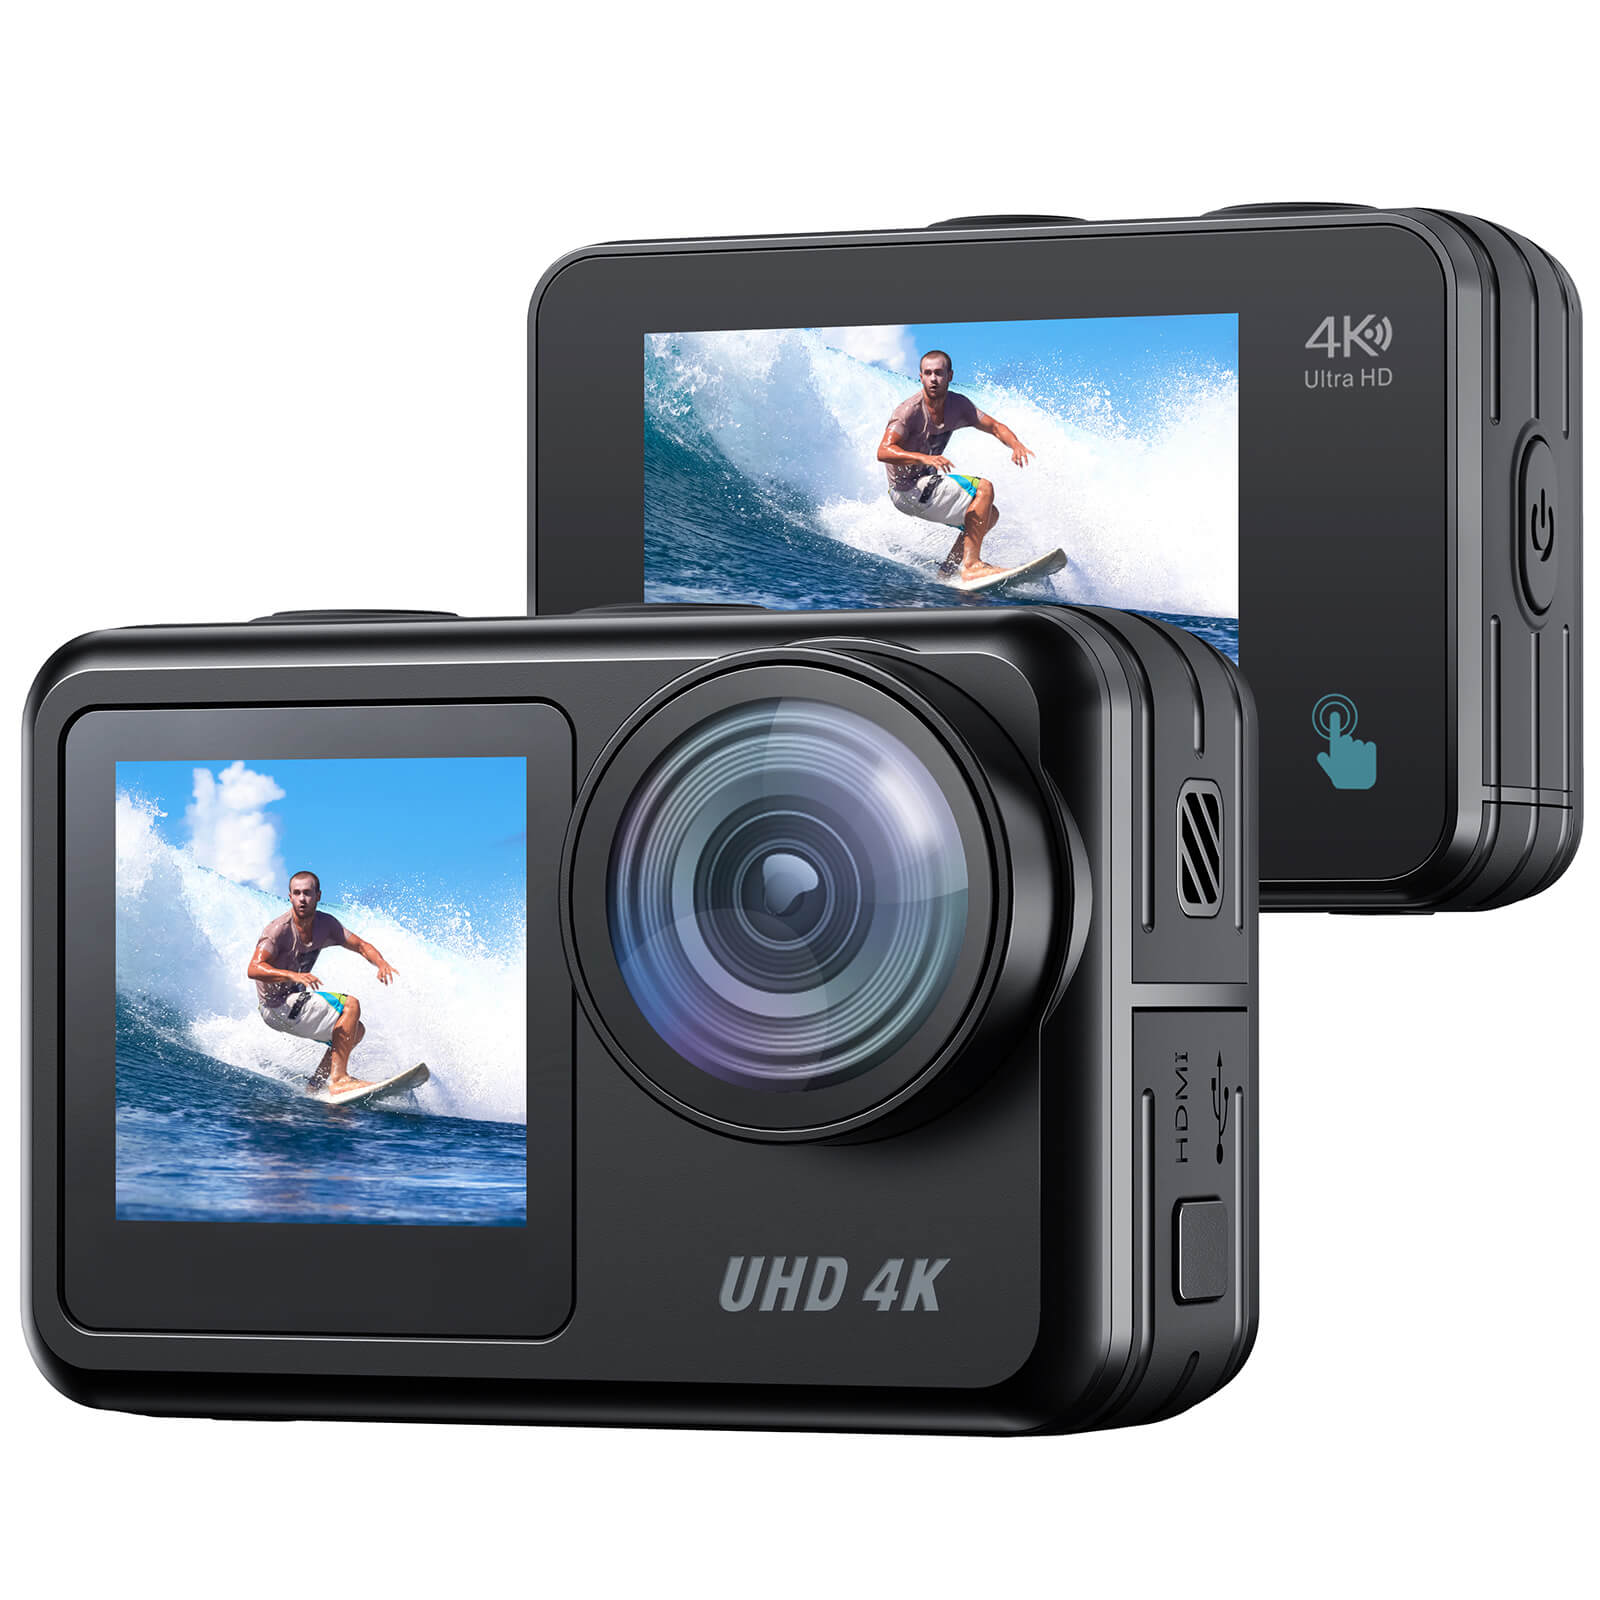 Campark V40 4K/30FPS WiFi Dual Screen Action Kamera 20MP Touchscreen 40M wasserdichte Kamera